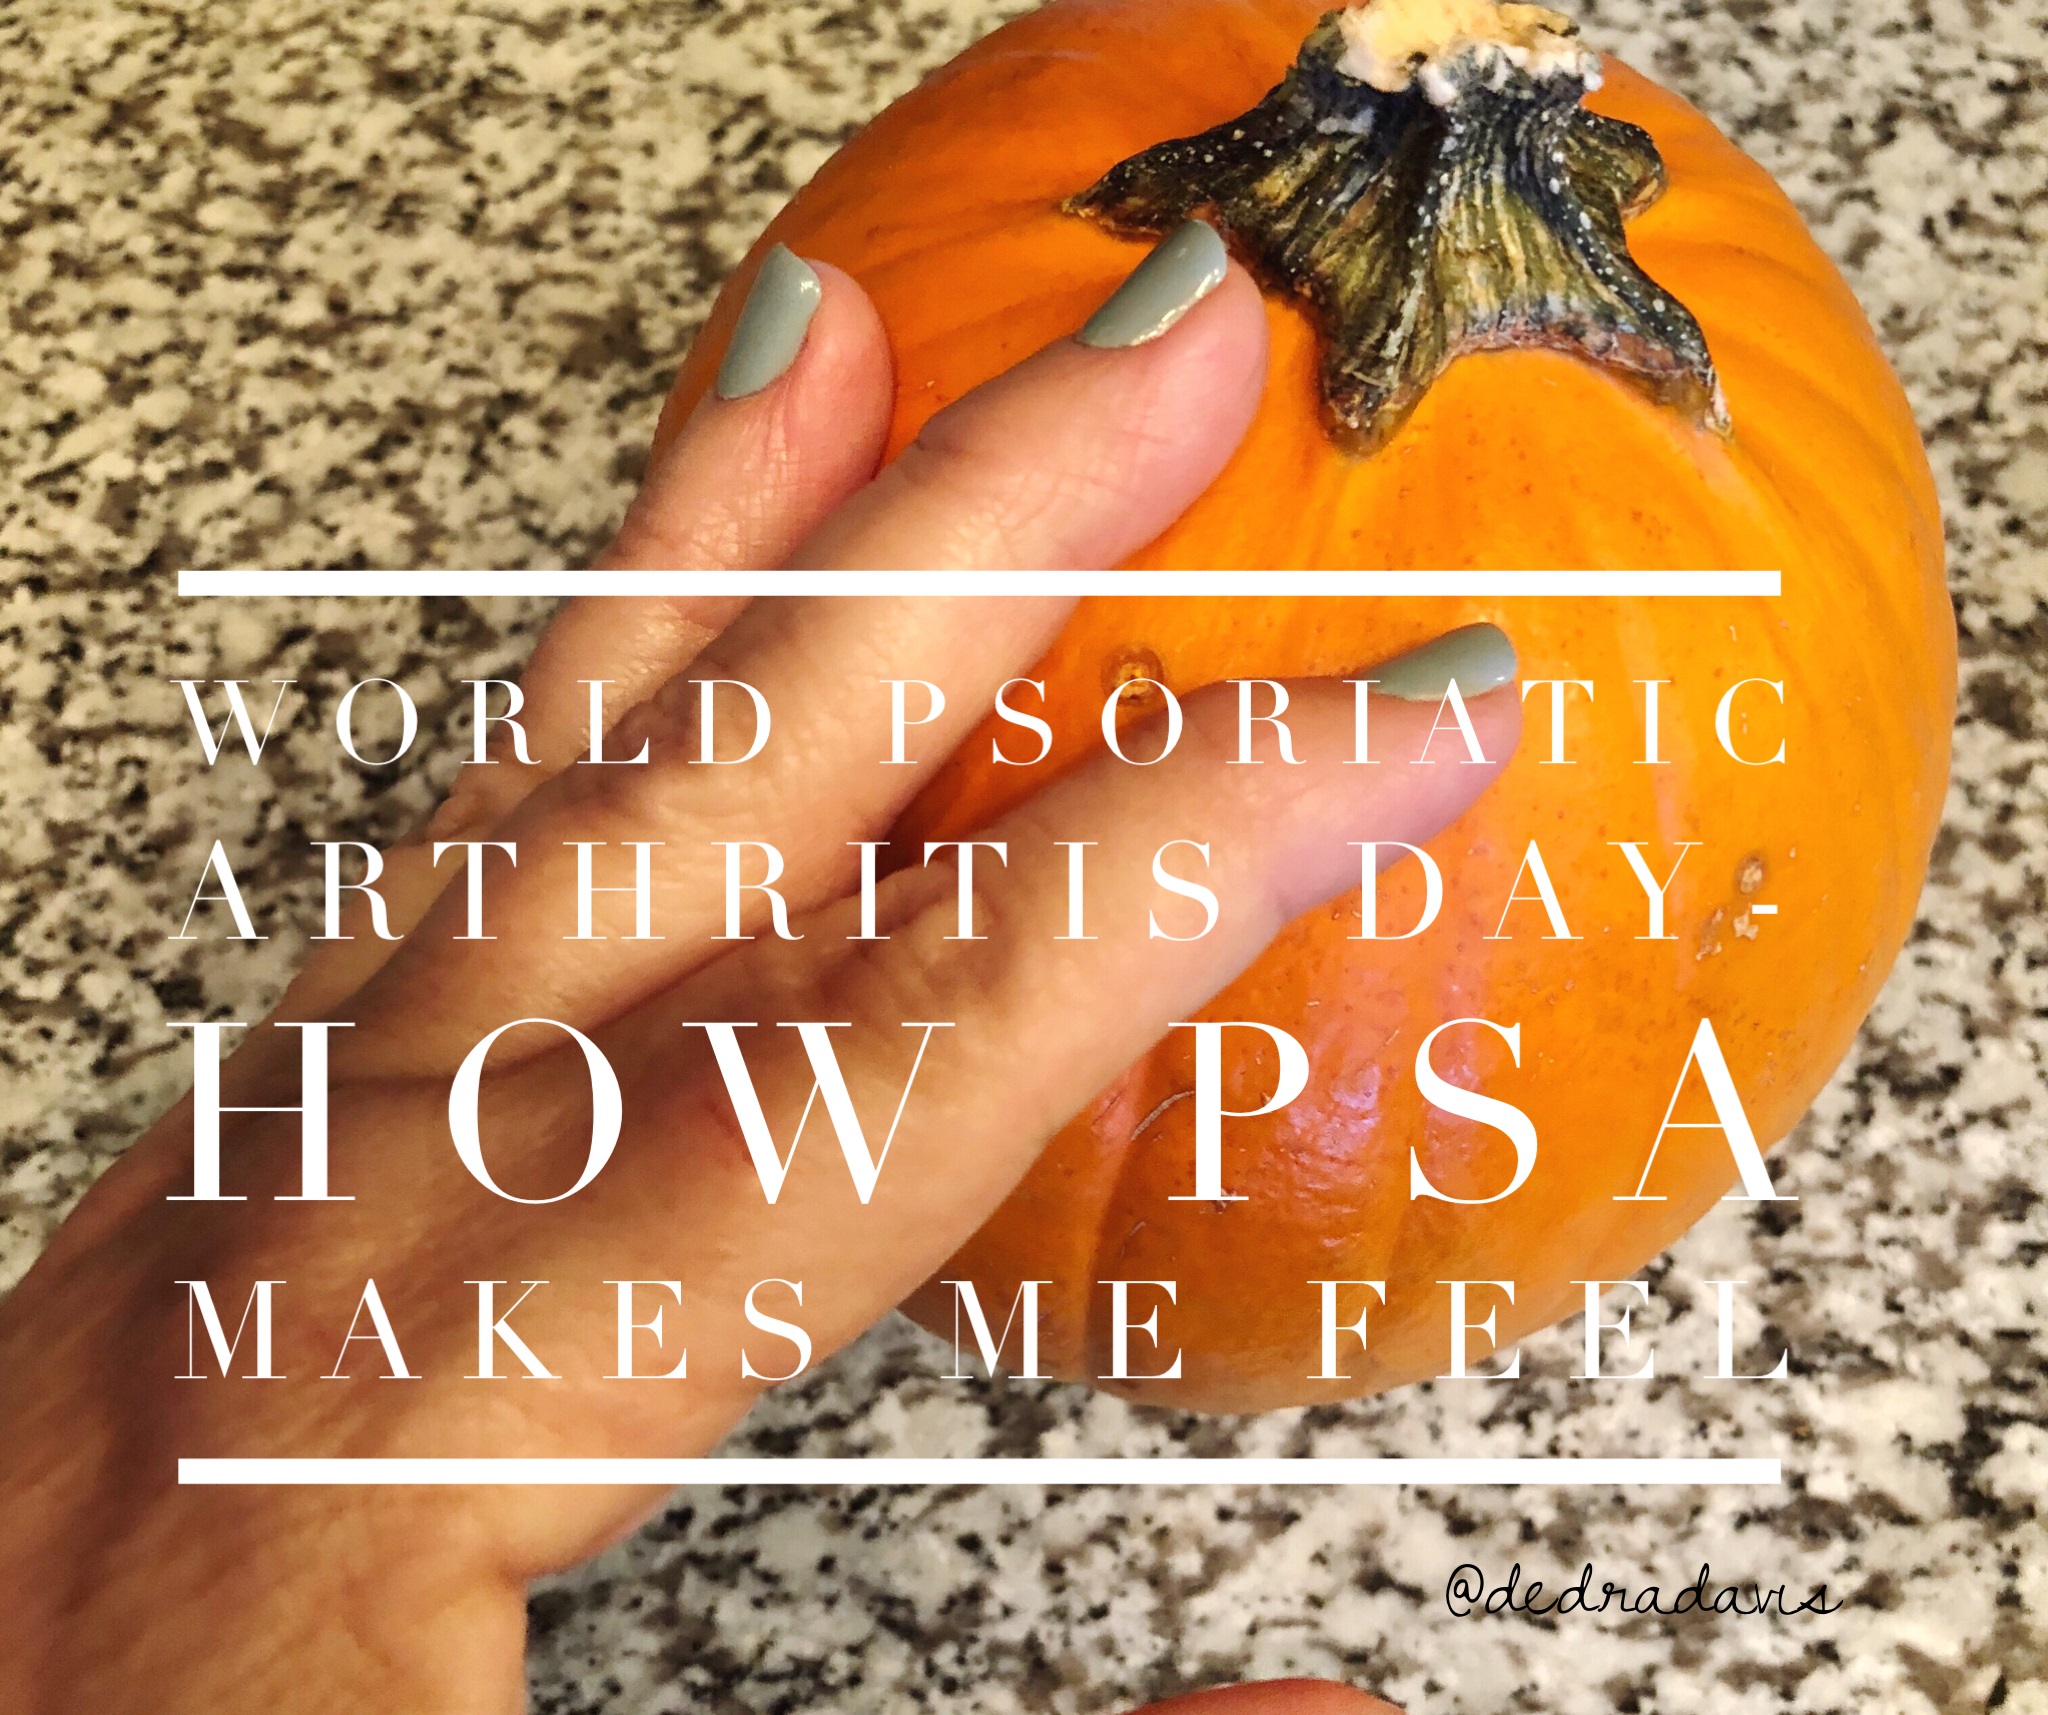 World Psoriatic Arthritis Day-How PsA Makes Me Feel